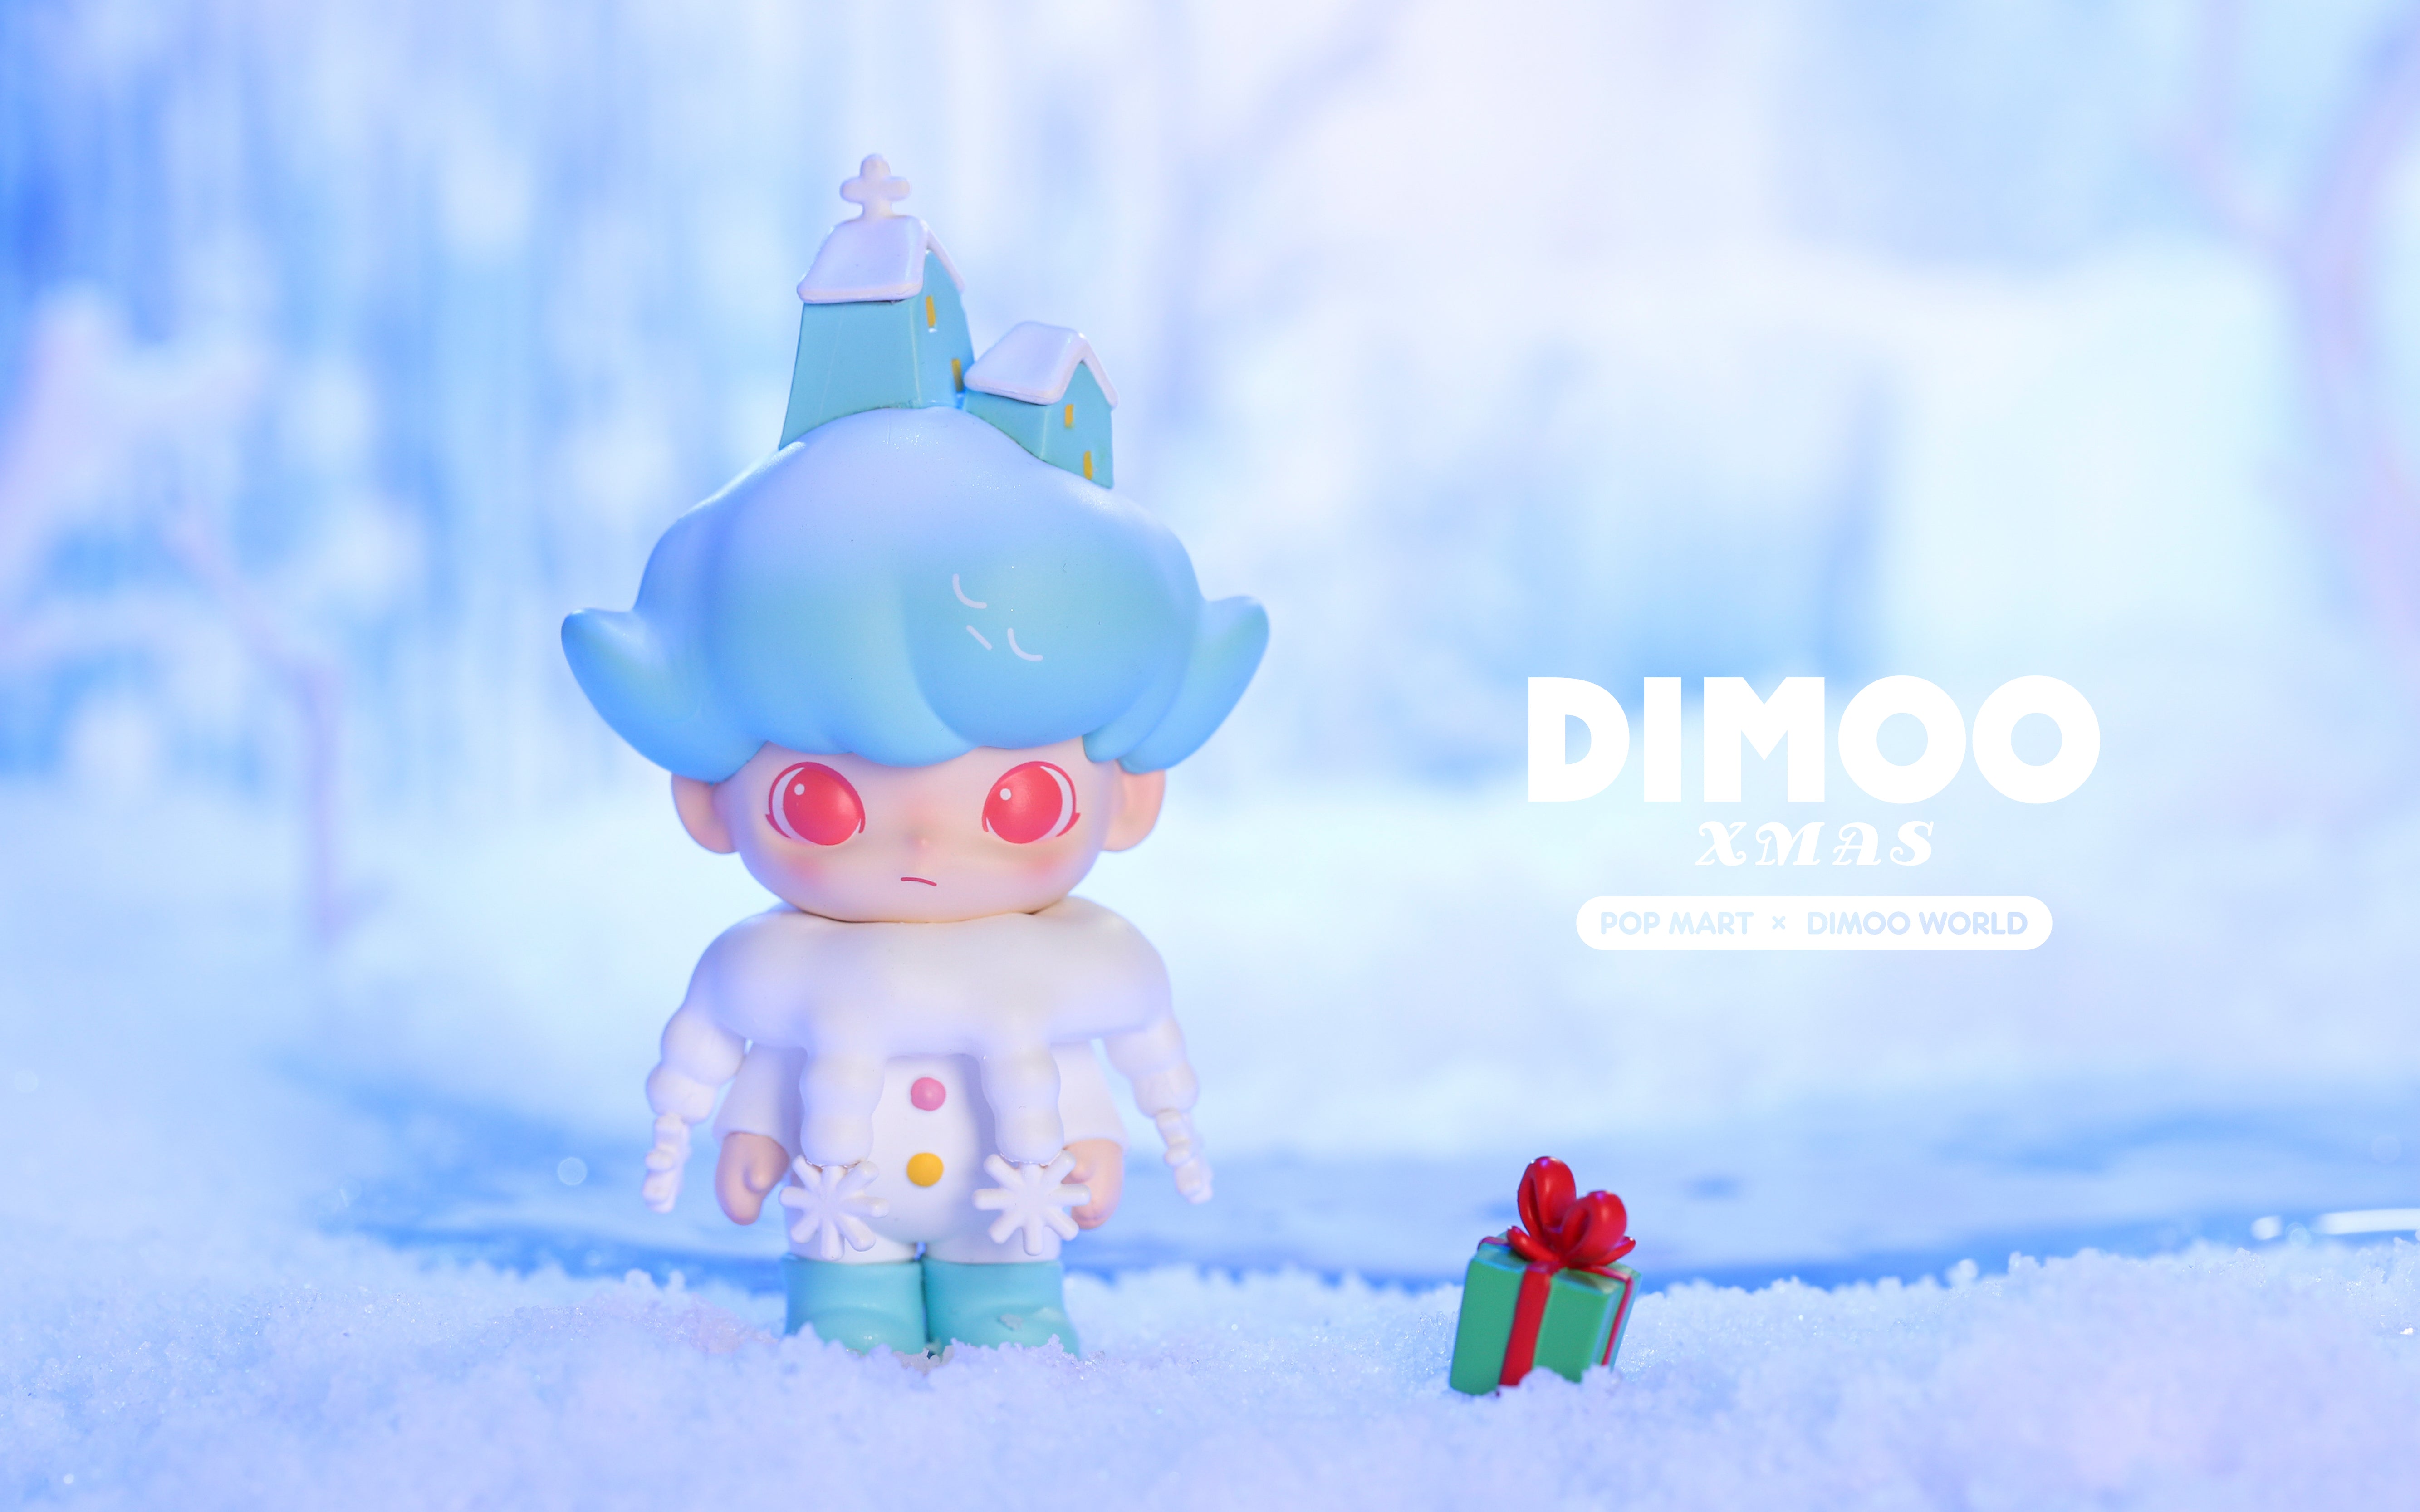 Dimoo Xmas Series by Ayan x Pop Mart